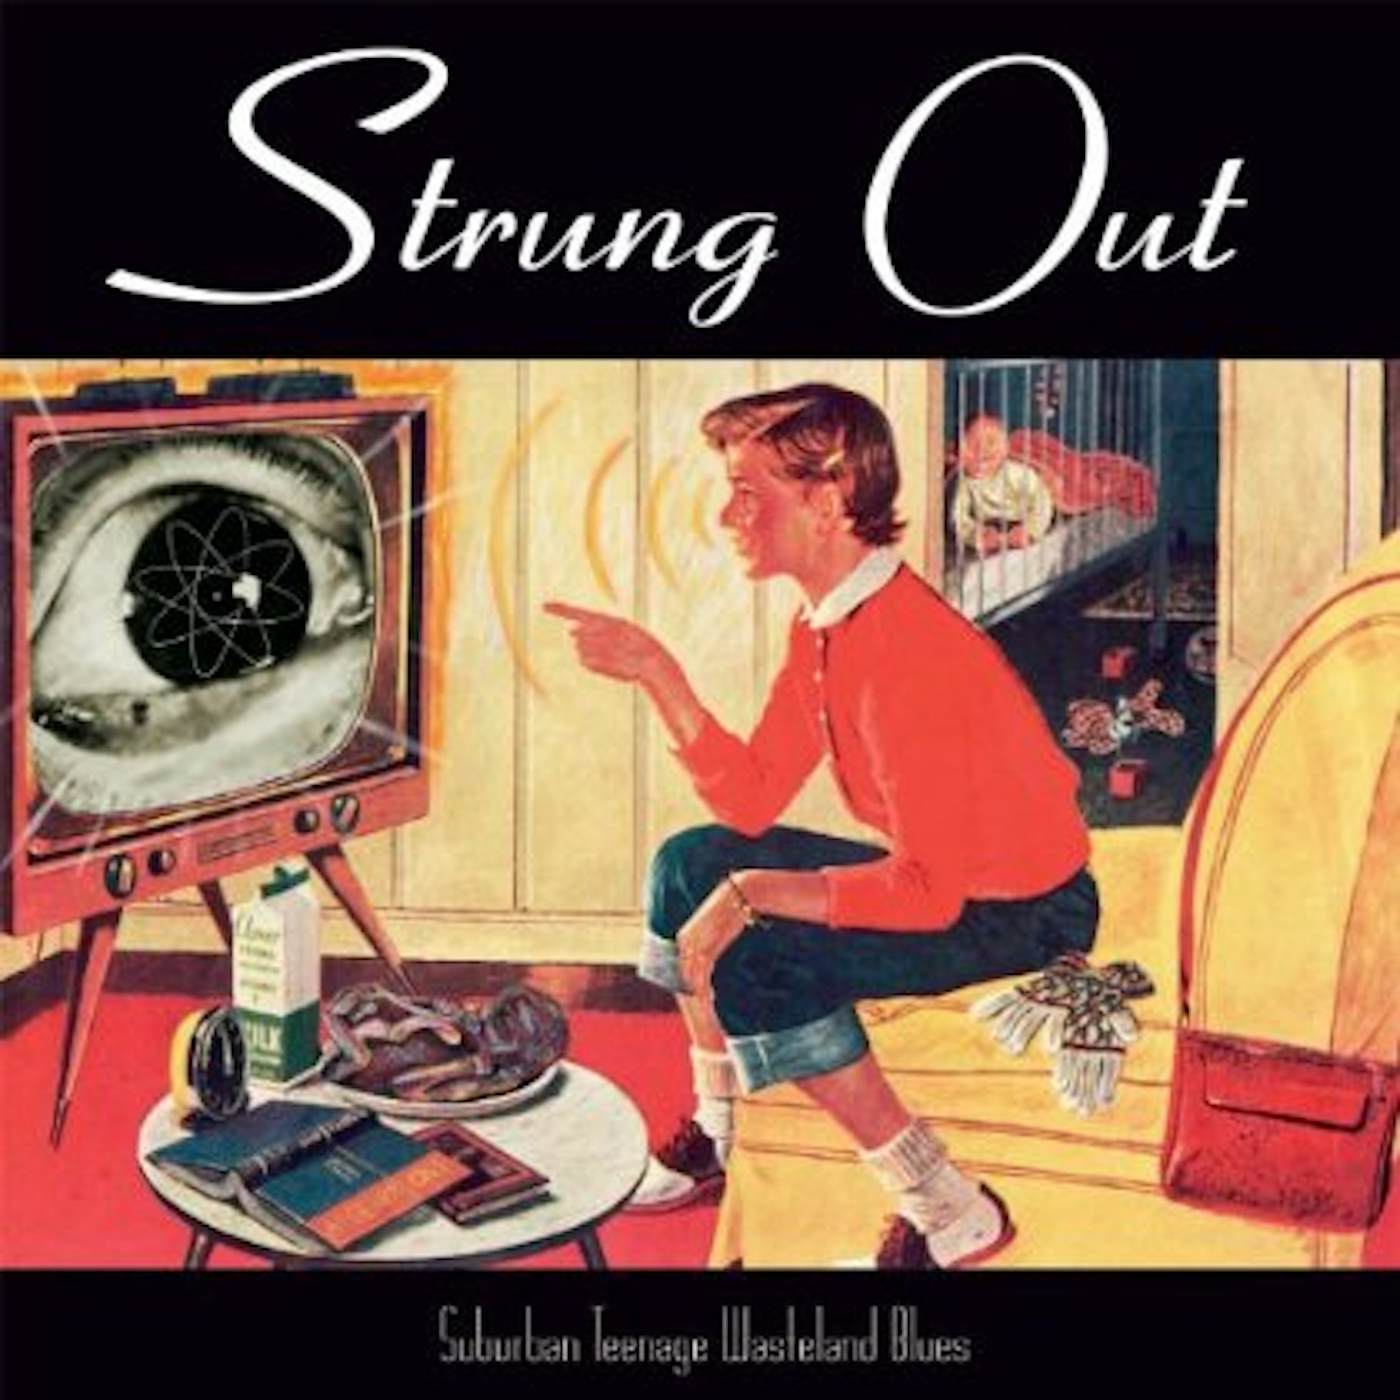 Strung Out SUBURBAN TEENAGE WASTELAND BLUES CD